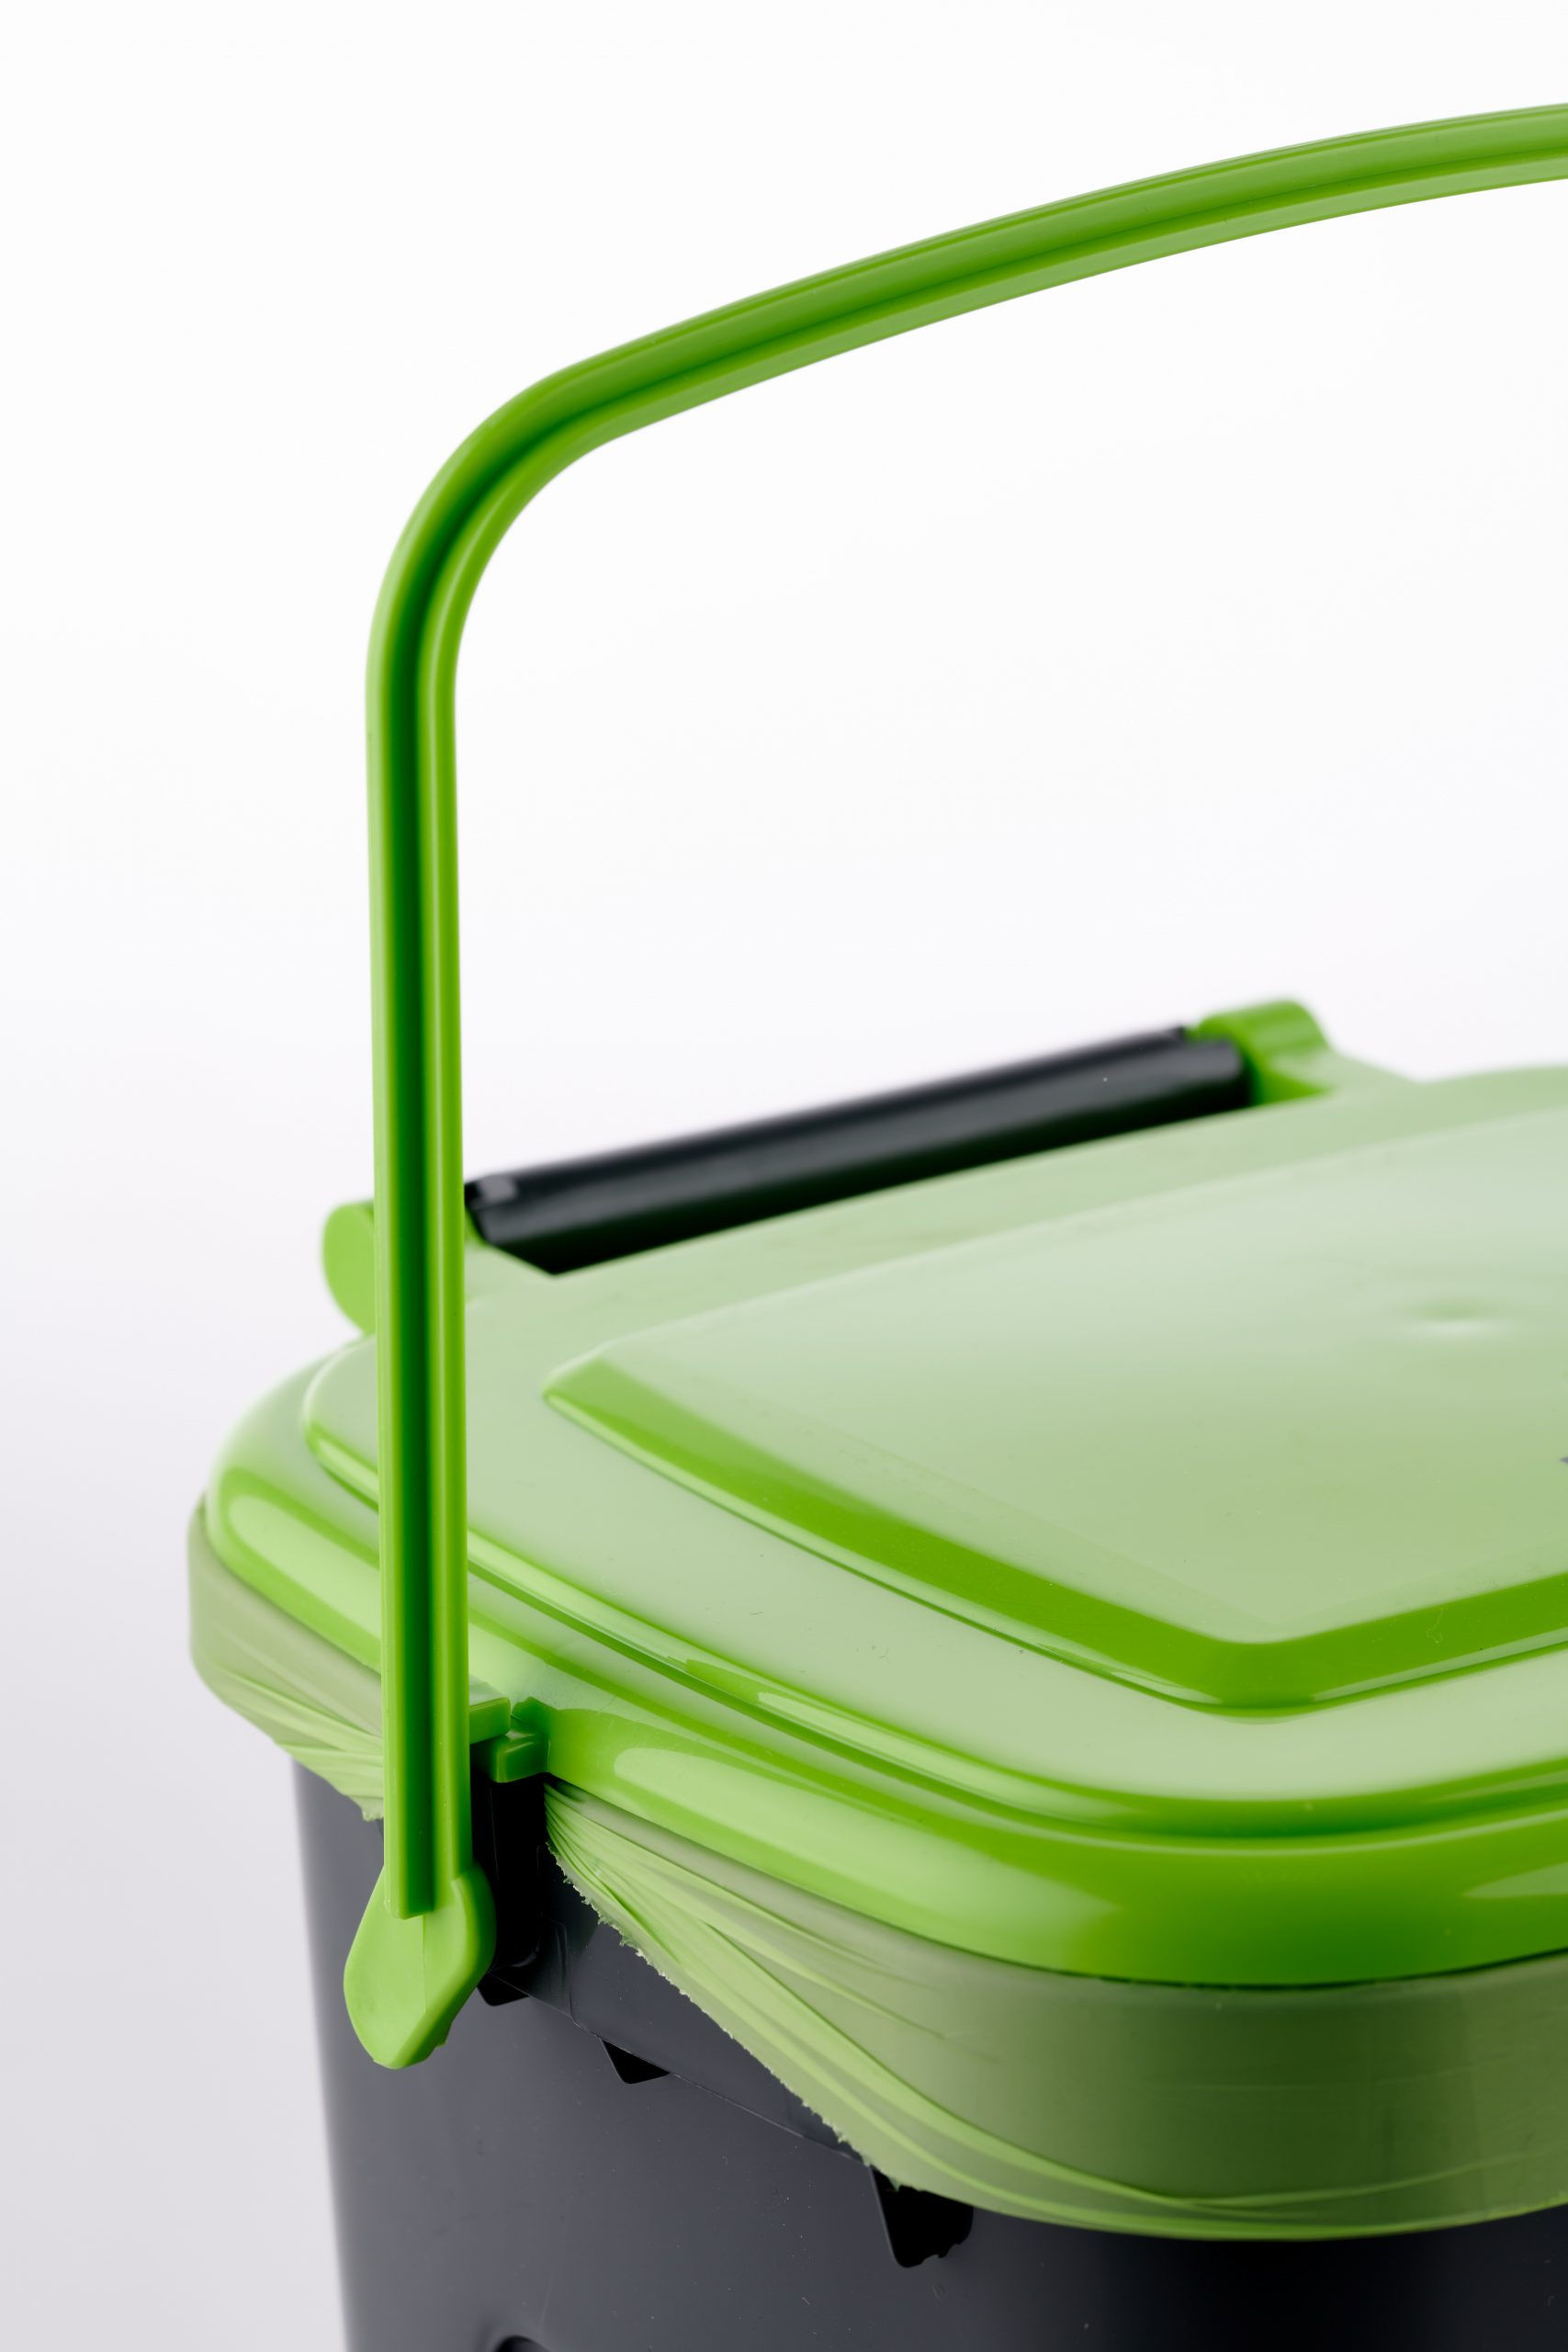 Compost Caddy  Dishwasher Safe Kitchen Compost Bin – Free Shipping